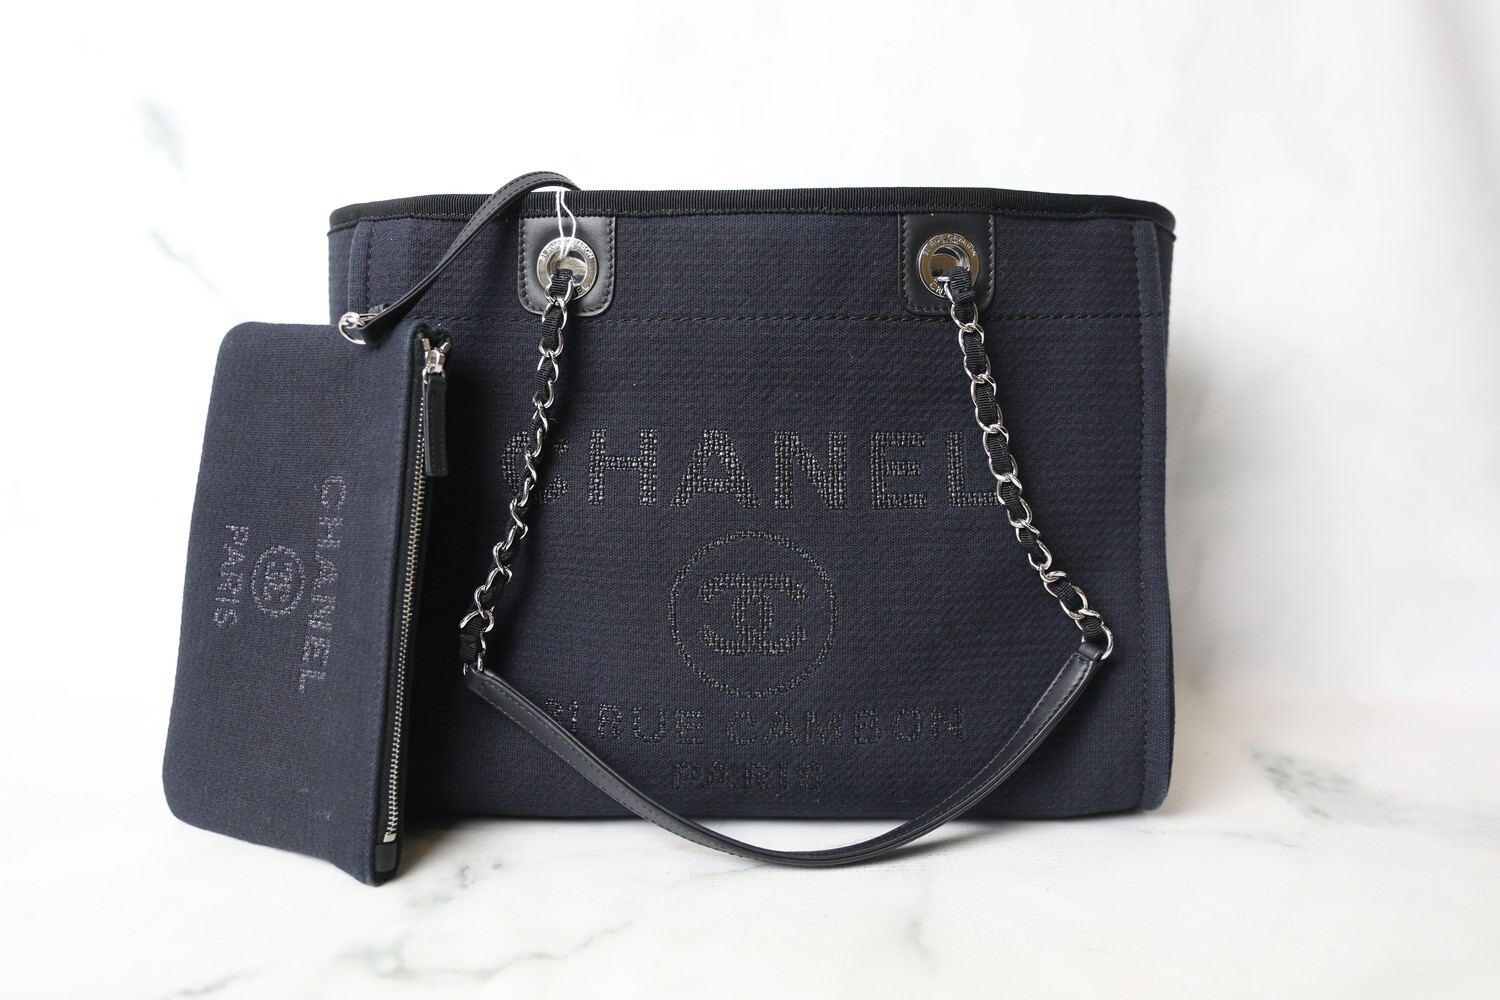 Chanel - Authenticated Deauville Handbag - Cotton Black Plain for Women, Very Good Condition